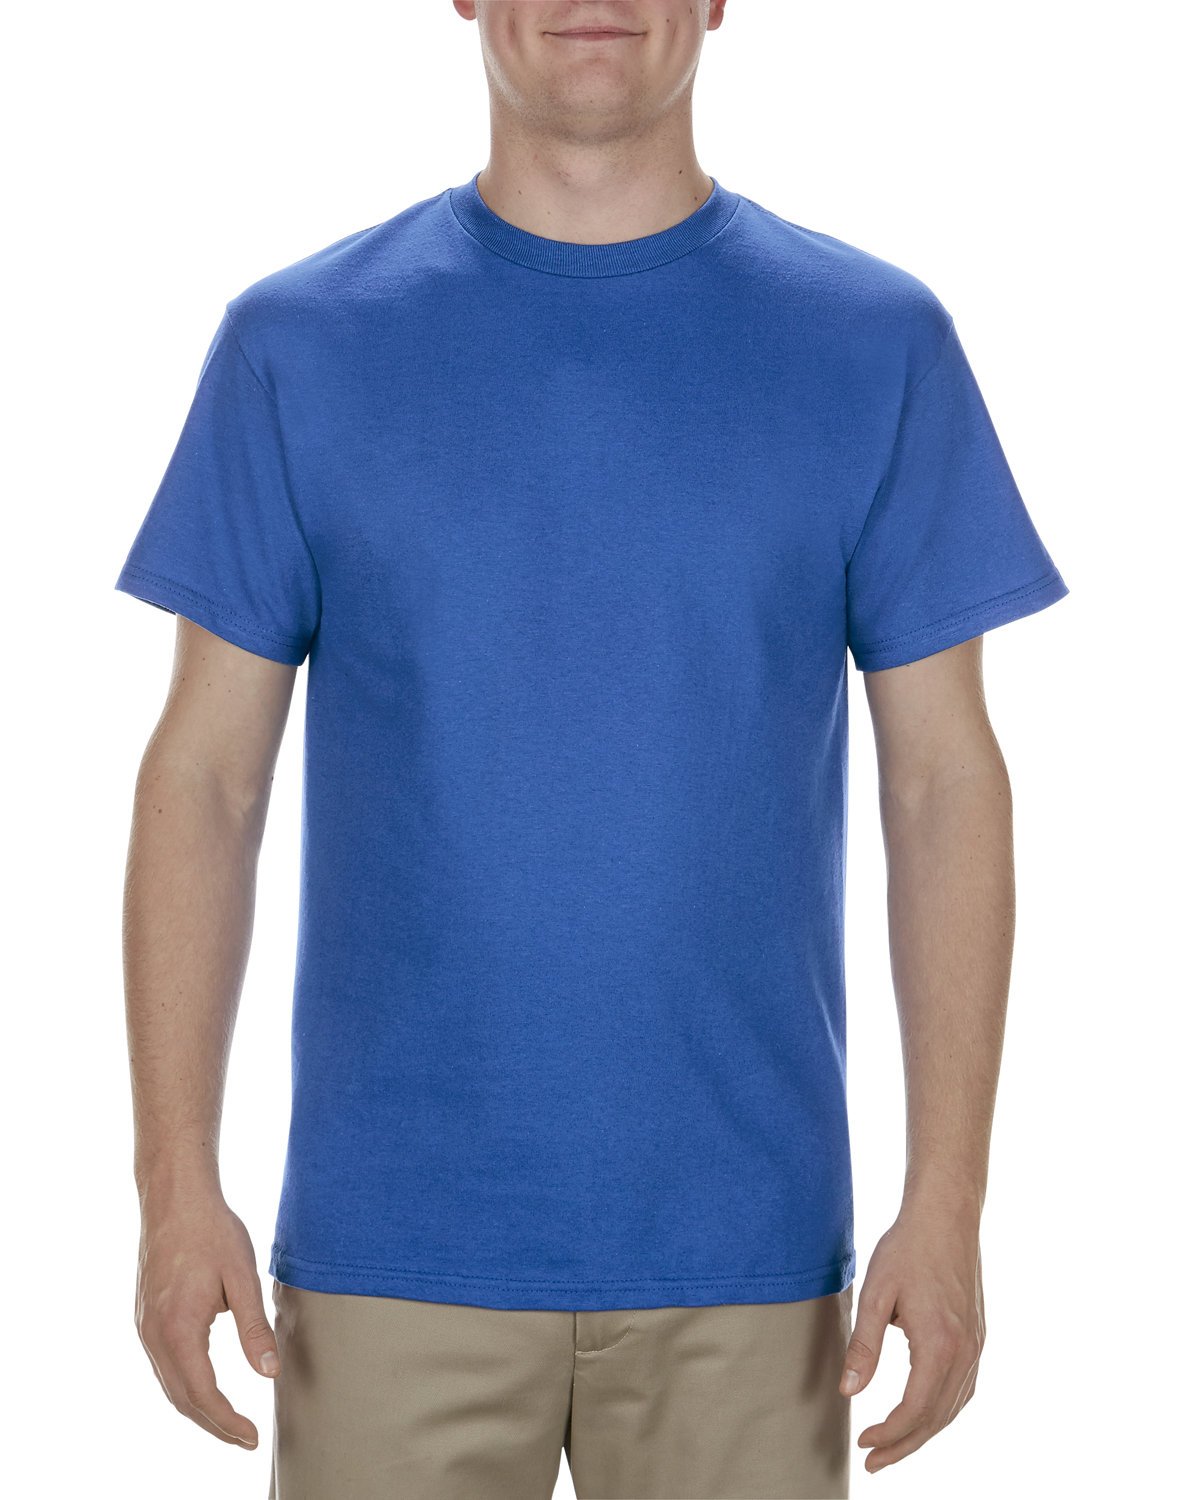 Alstyle Adult 5.1 oz., 100% Soft Spun Cotton T-Shirt ROYAL 